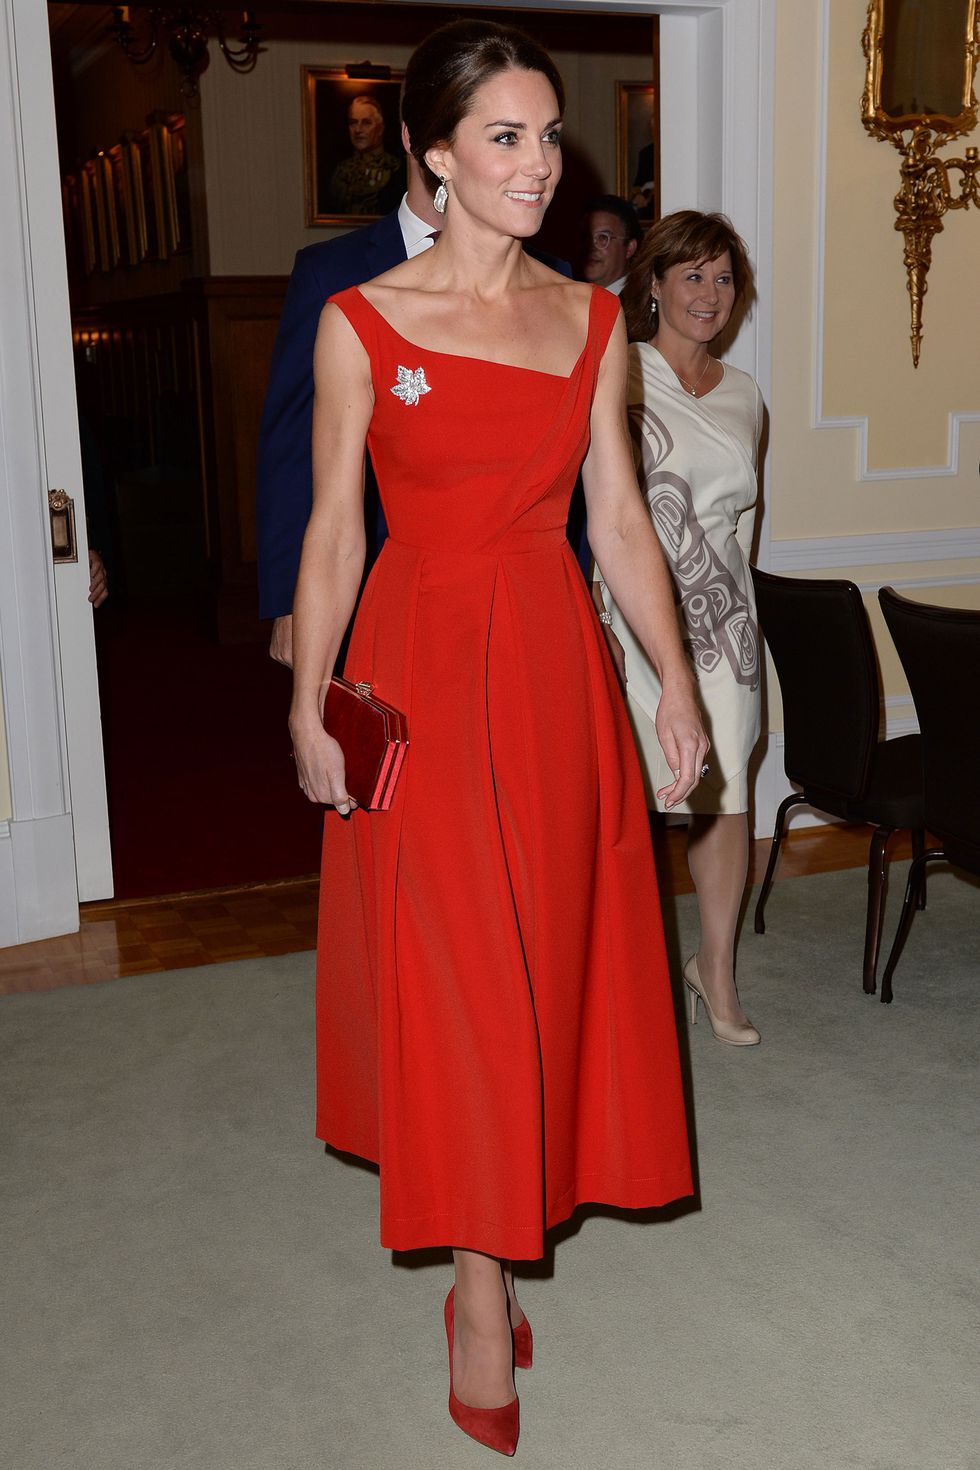 Duchess of Cambridge wearing red